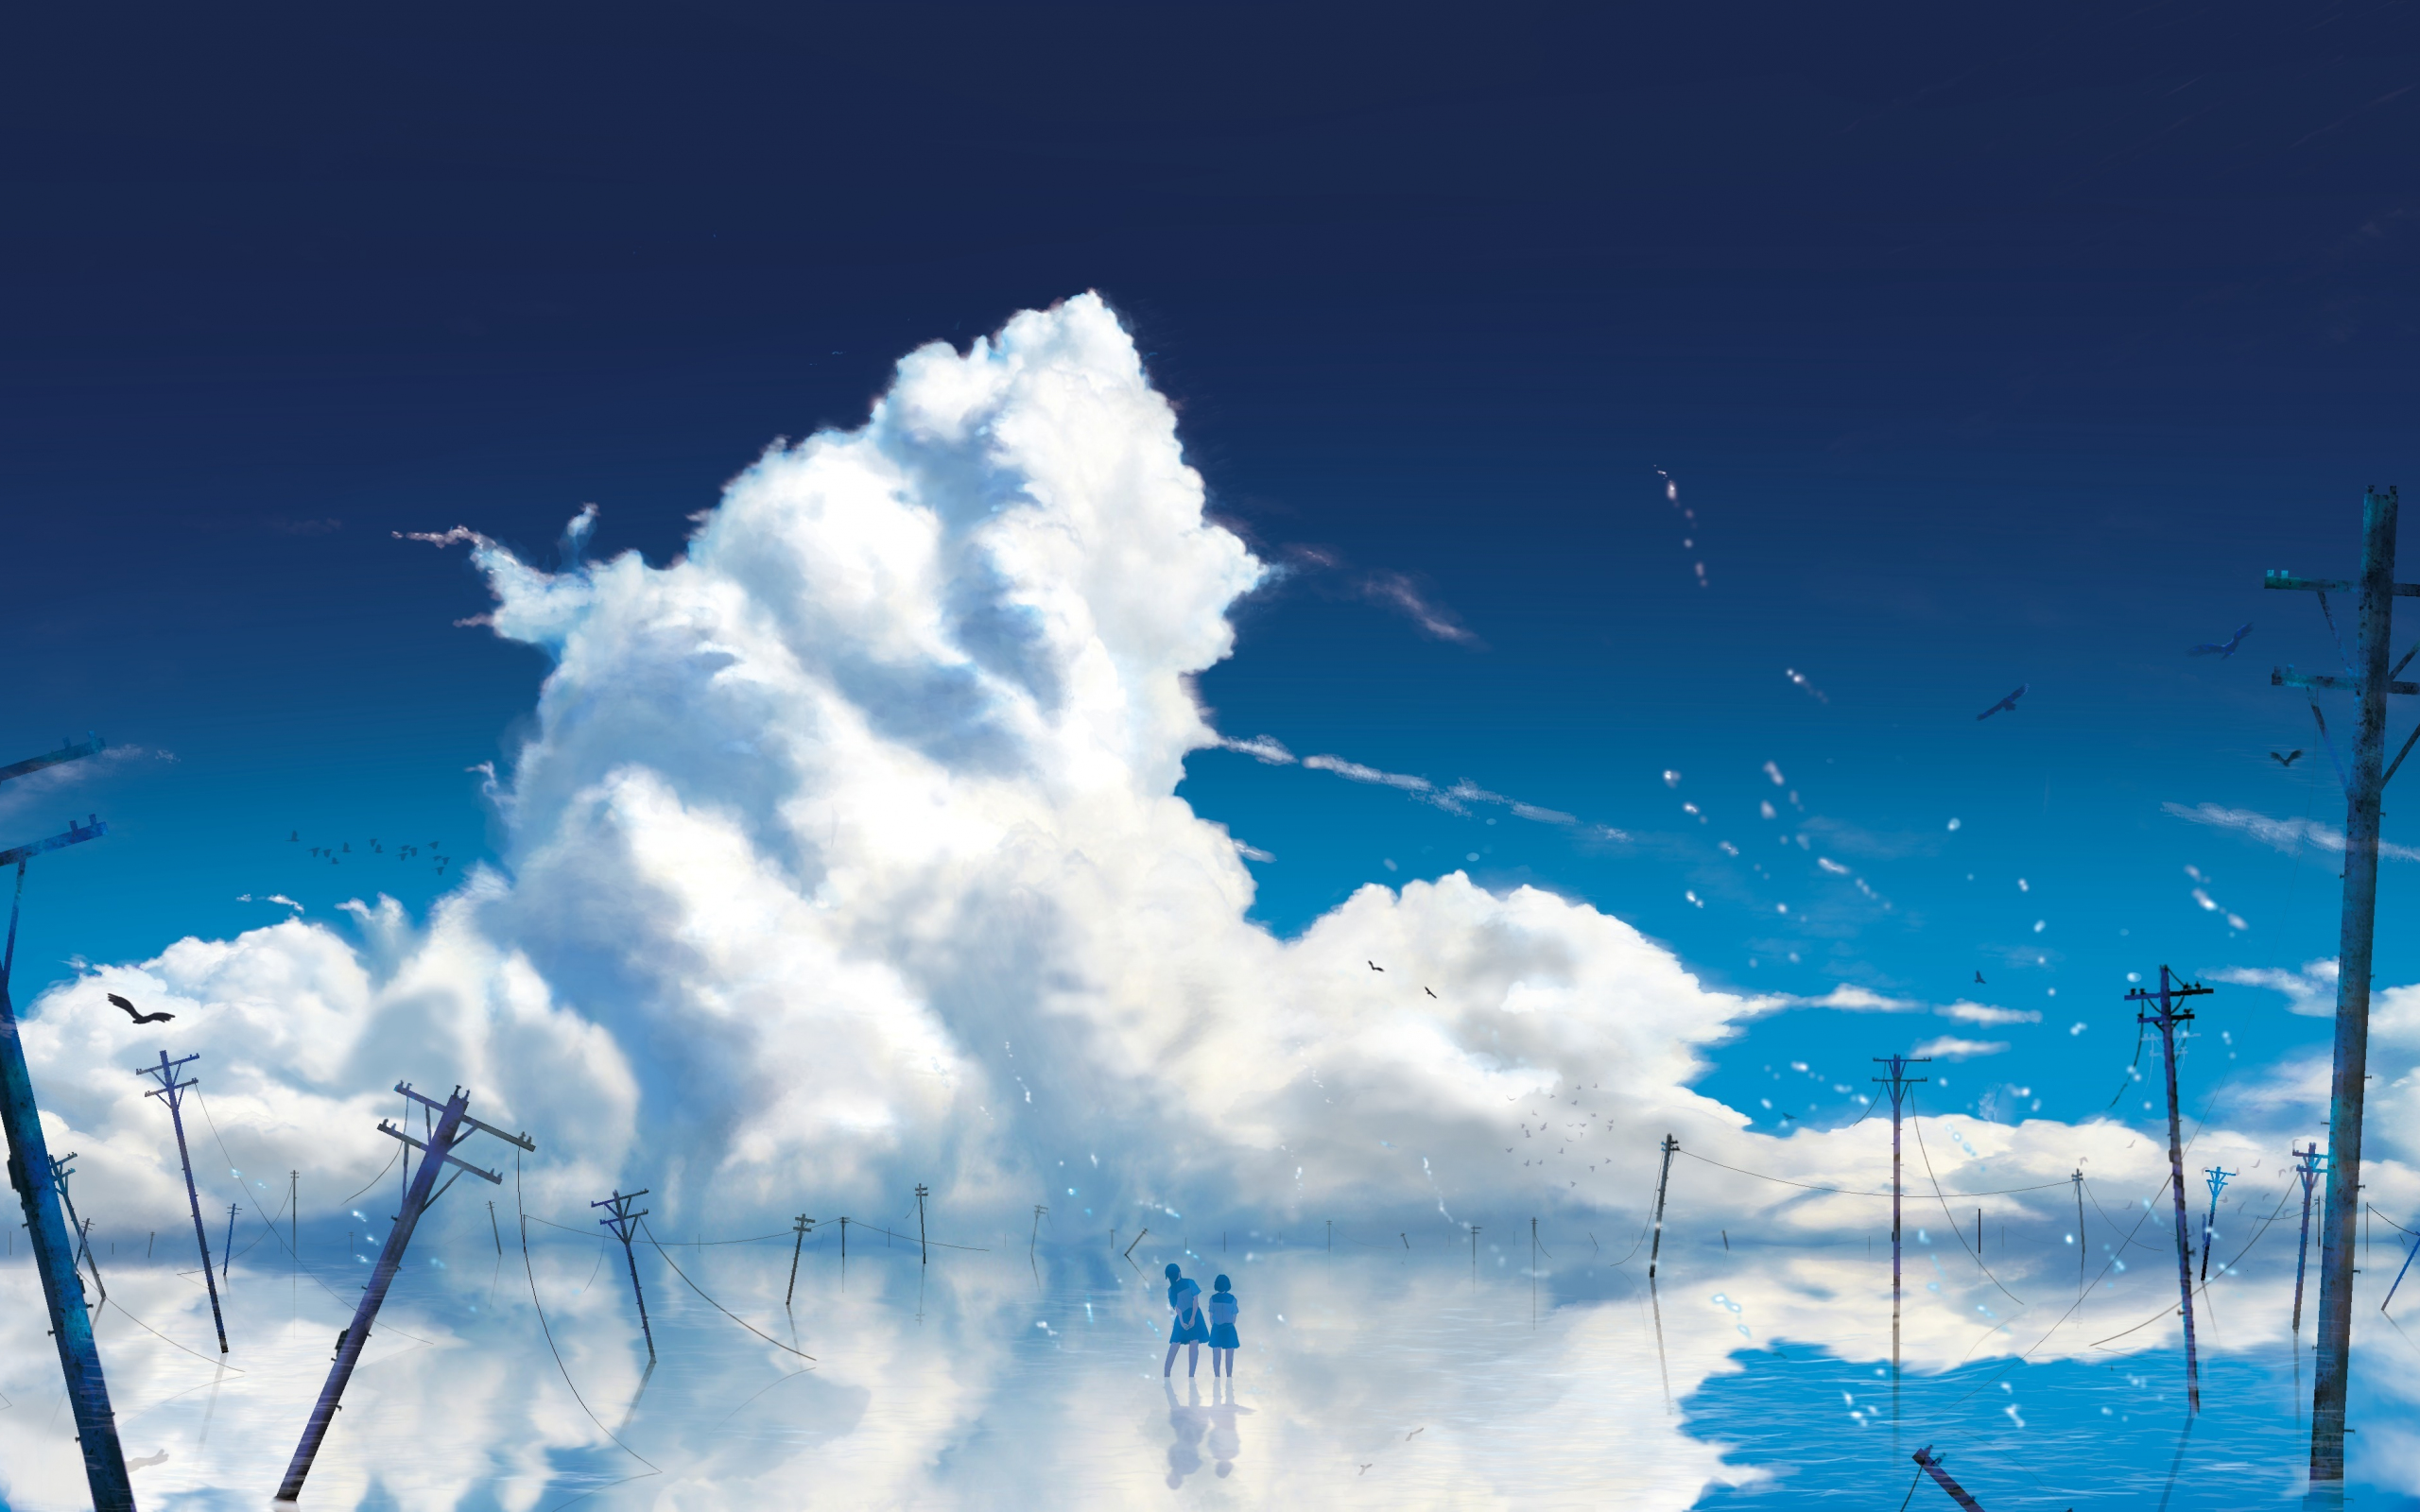 Download 2560x1600 Wallpaper Anime Girls Outdoor Clouds Dual Wide Widescreen 16 10 Widescreen 2560x1600 Hd Image Background 15